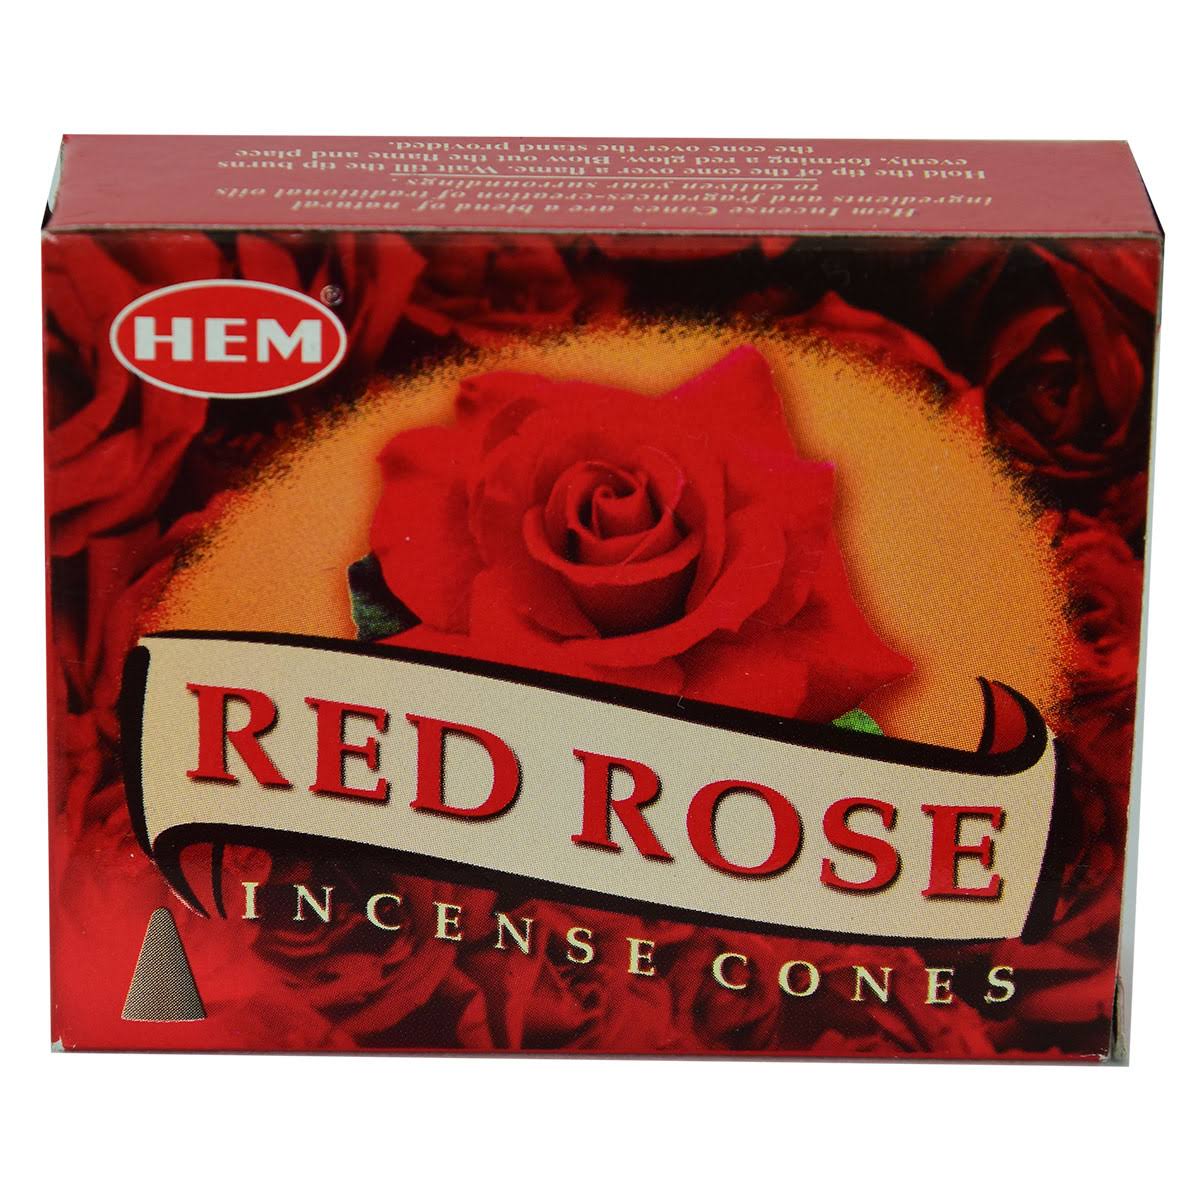 Red Rose - Hem Incense Cones Pack of 5 (1 Pack=10 Cones)